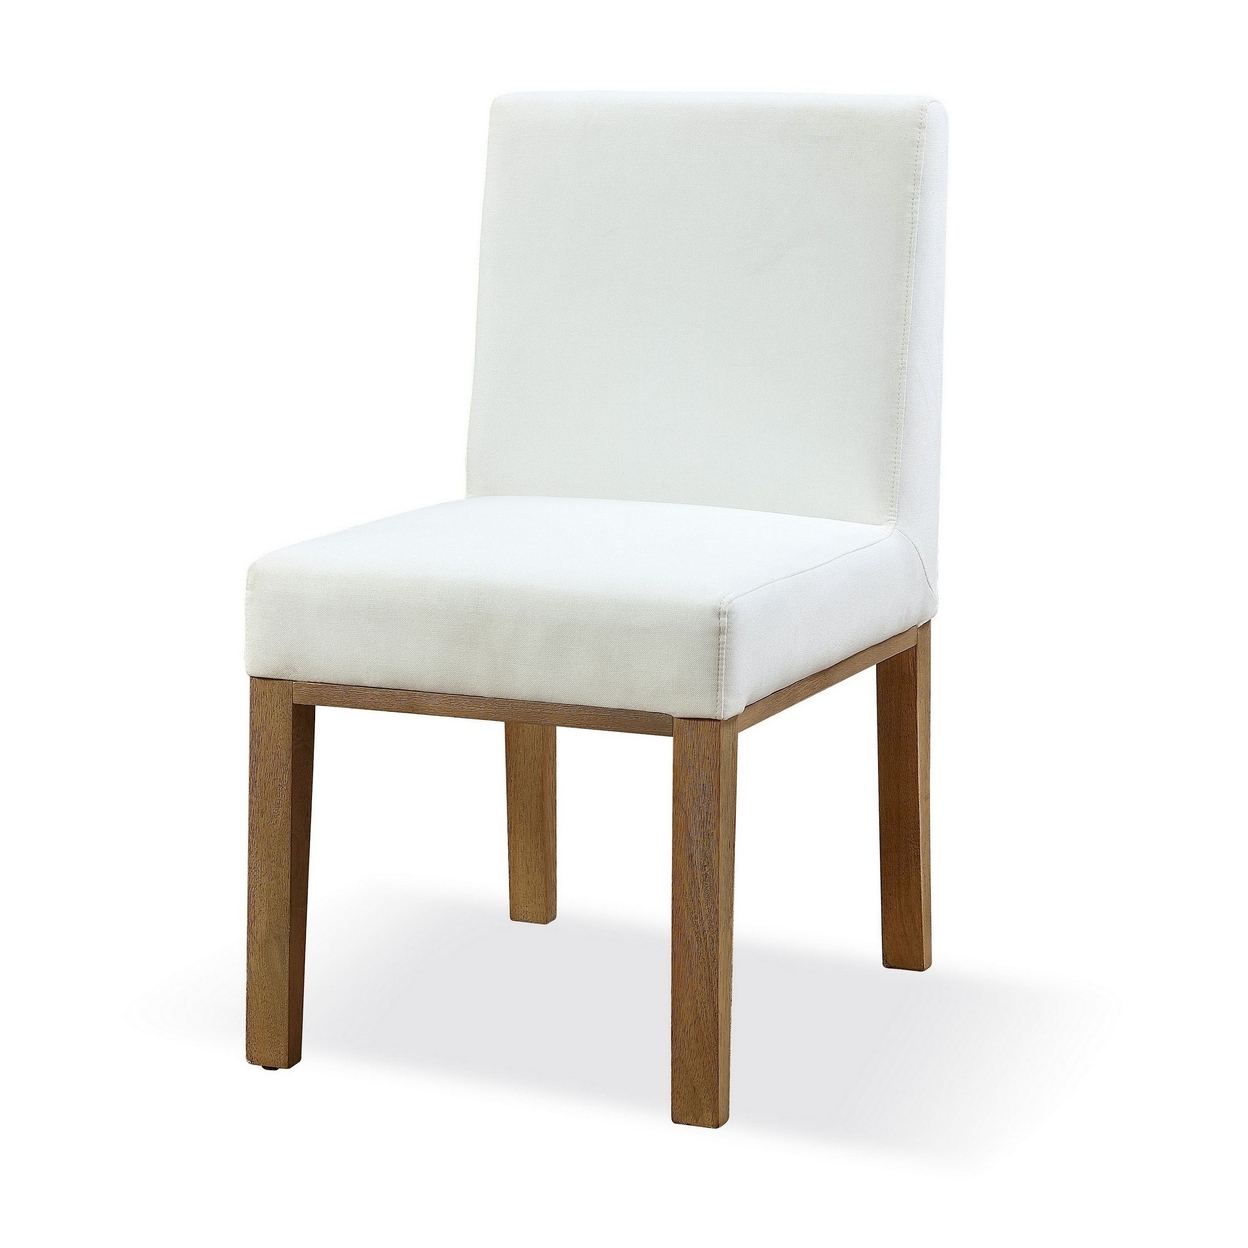 Rux 19 Inch Dining Chair, White Polyester Fabric, Wood Legs, White, Brown -Saltoro Sherpi